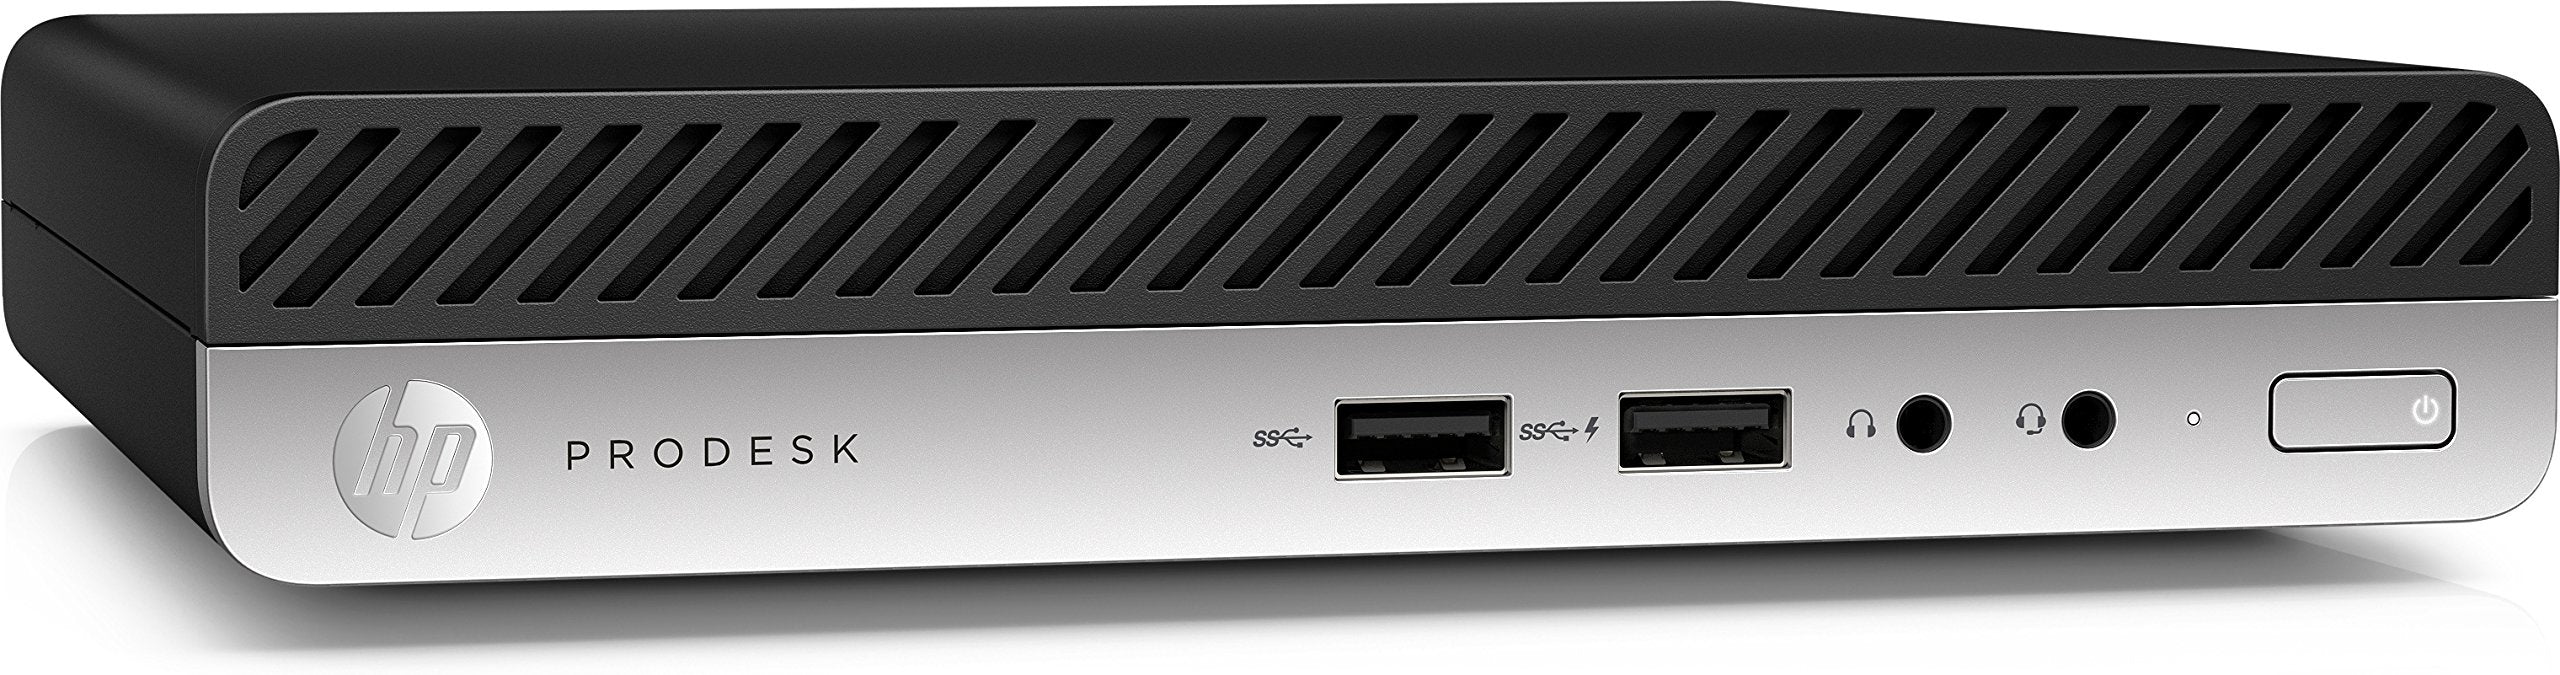 HP ProDesk 400 G4 Desktop Mini Core - i3 8100T (4 Core, 3.2GHz), 8GB DDR4, 256GB NVMe SSD, Intel 9560NGW Wireless Dual Band 11AC & BT with Enhanced Dual Antennas, FREE Win 11 Pro Upgrade (Renewed)